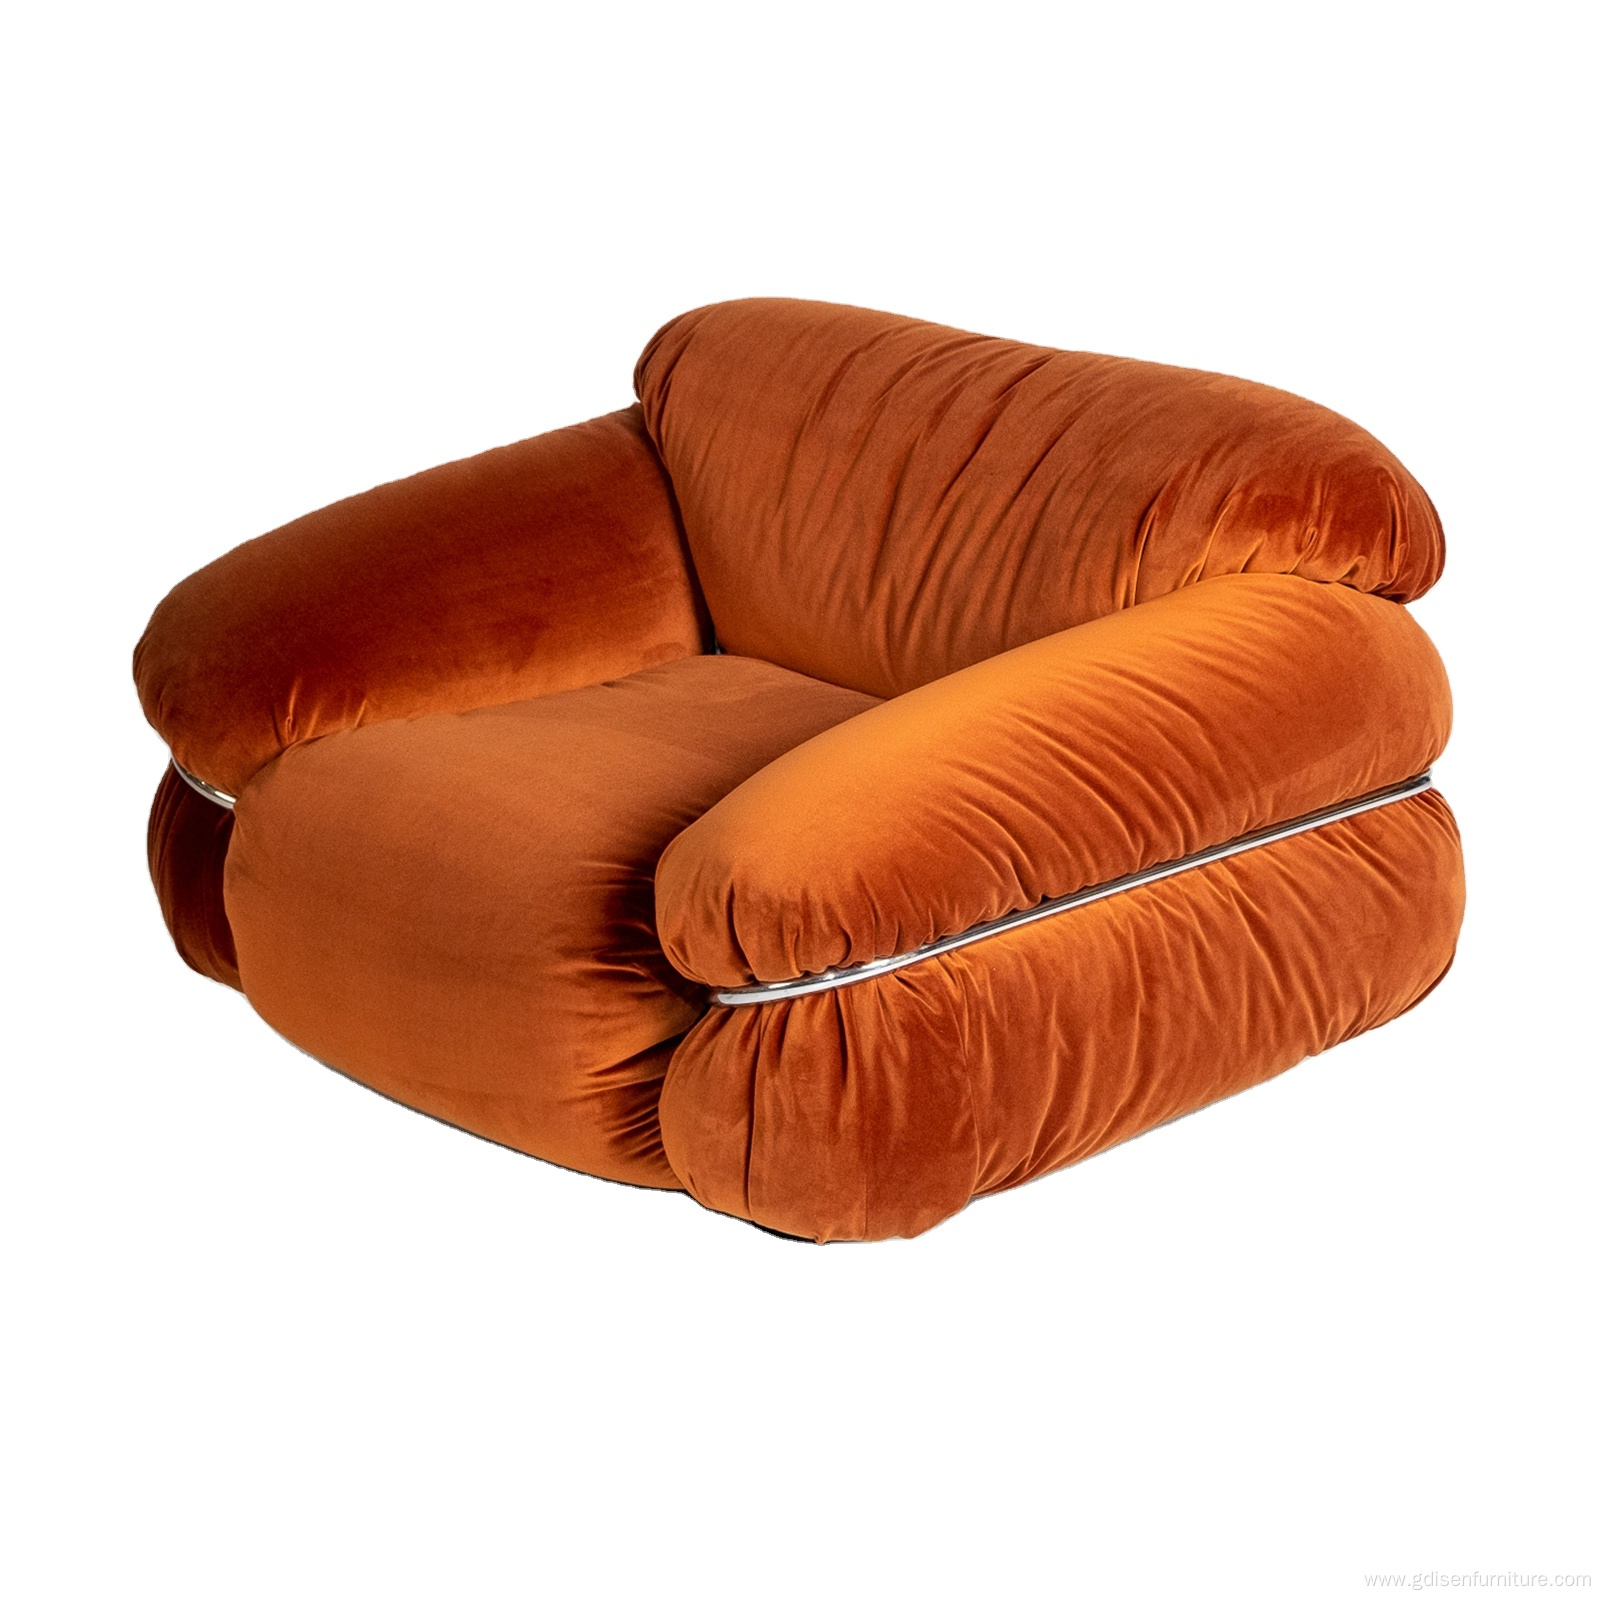 Sesann Tacchini Sofa for Living Room Furniture